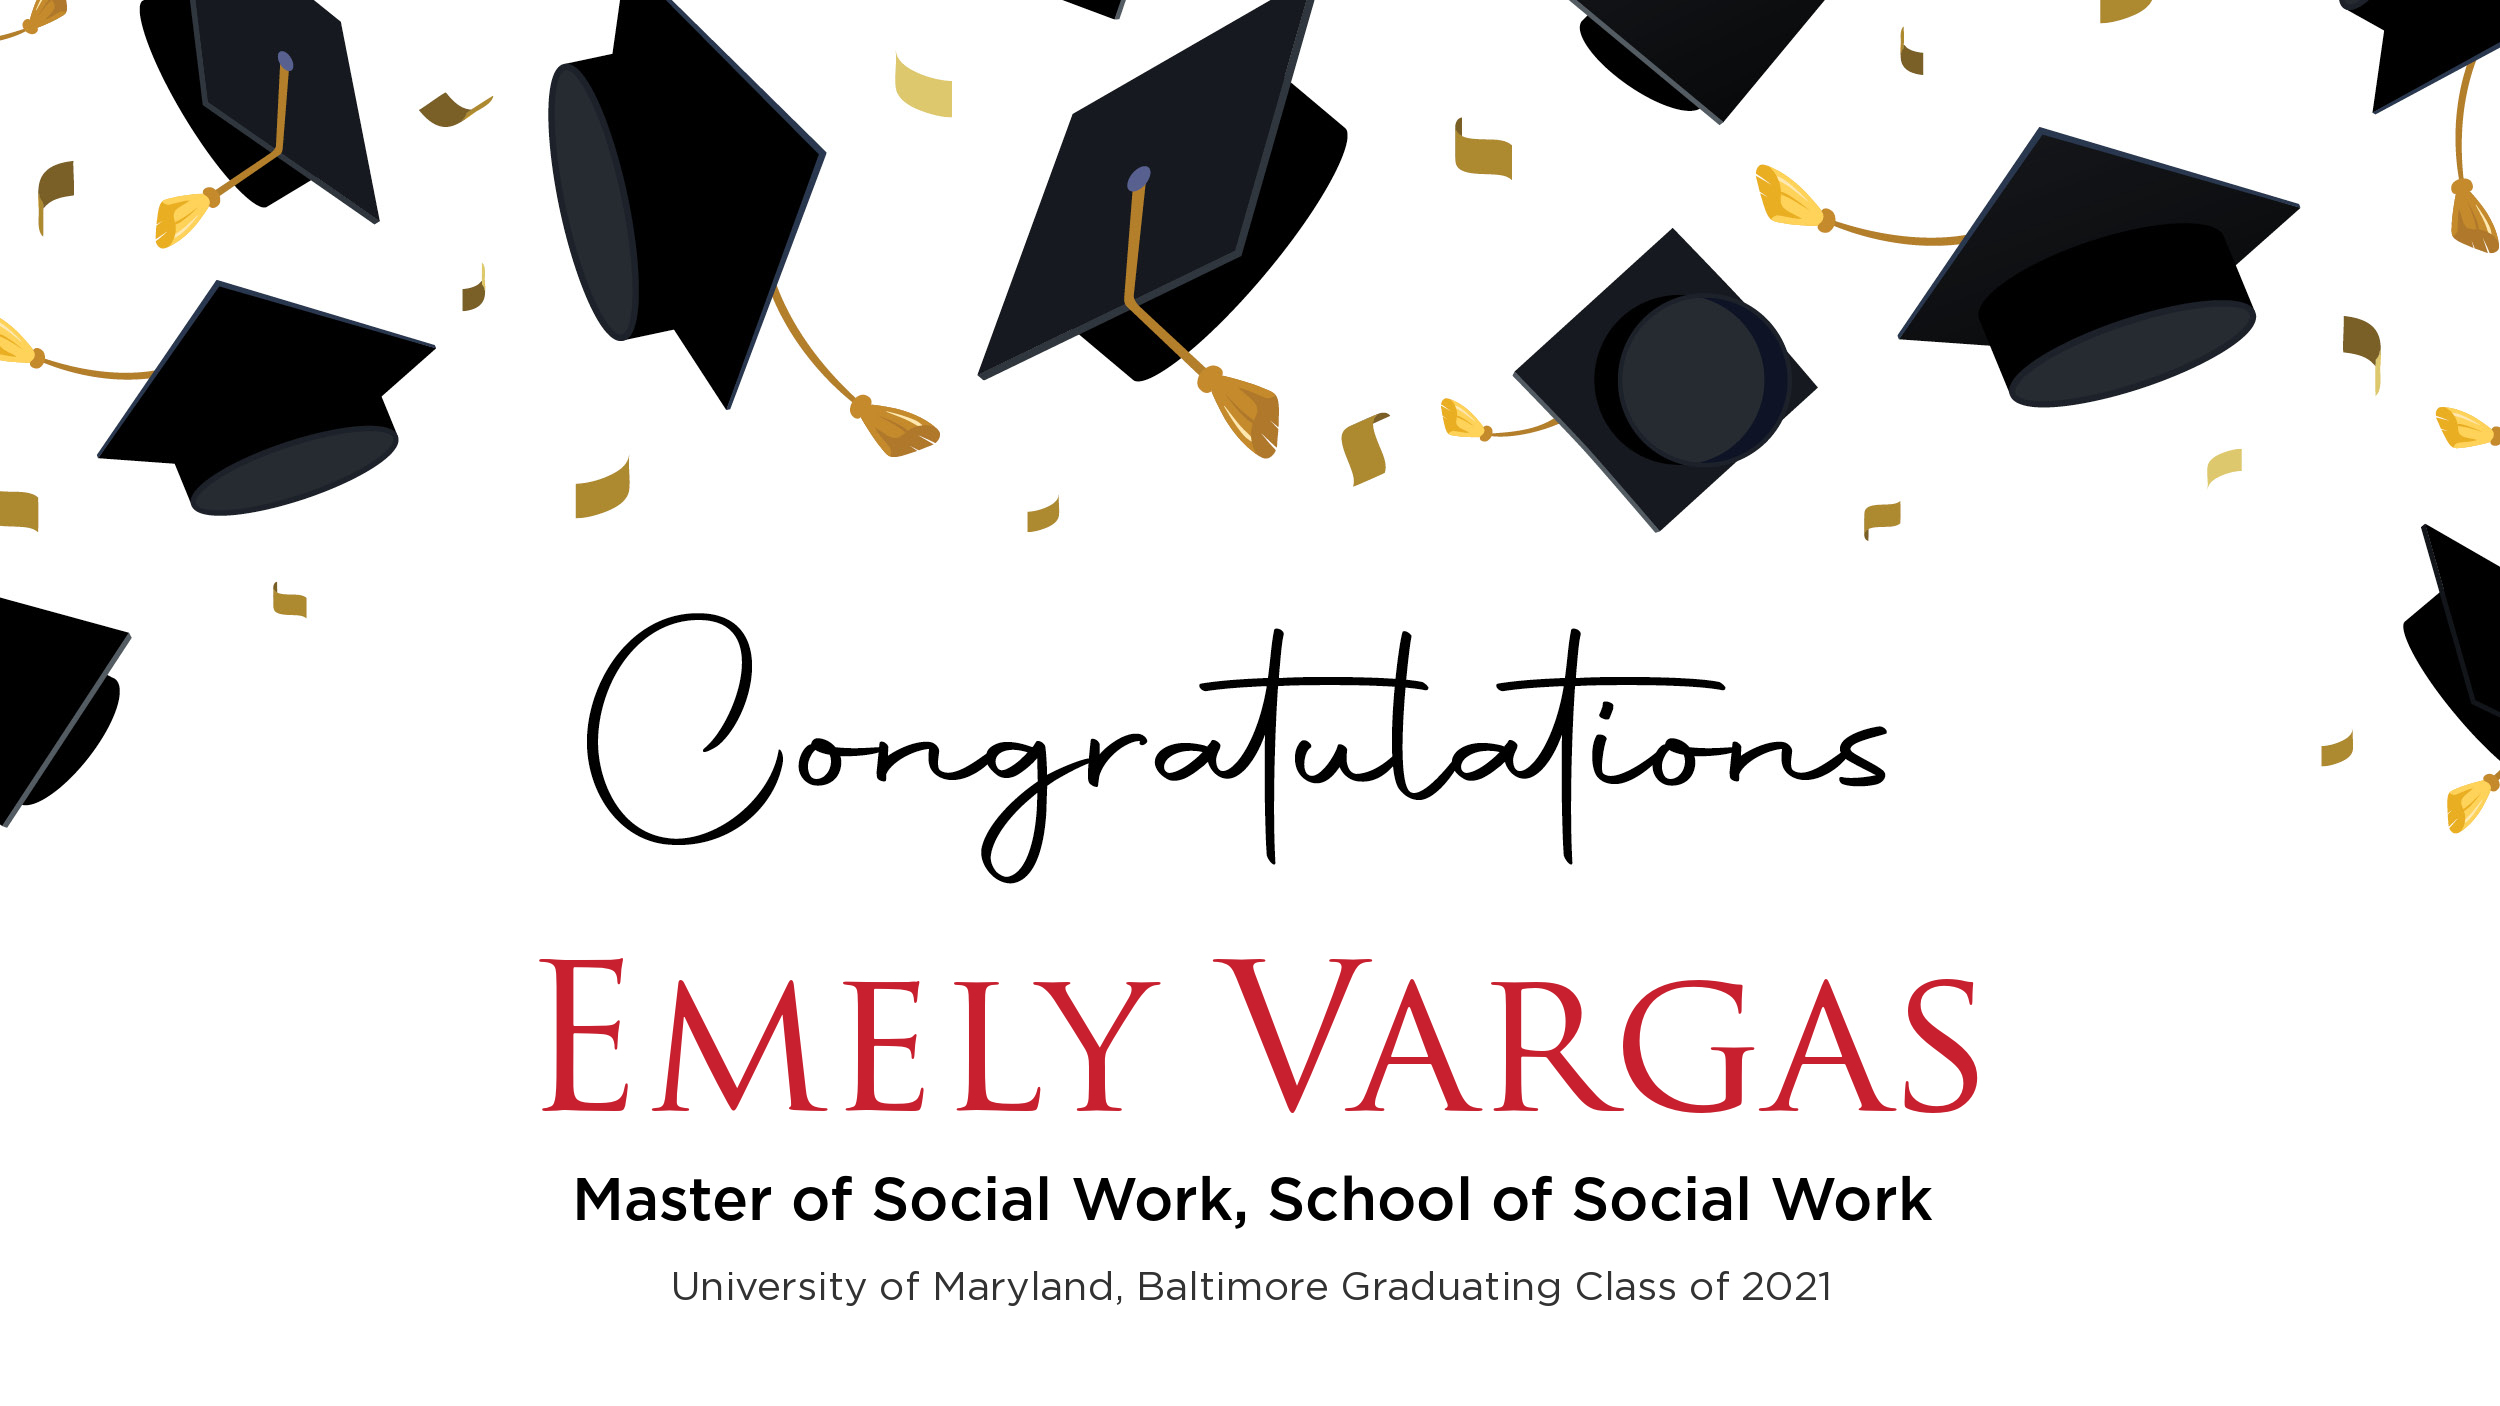 Congratulations Emely Vargas, Master of Social Work